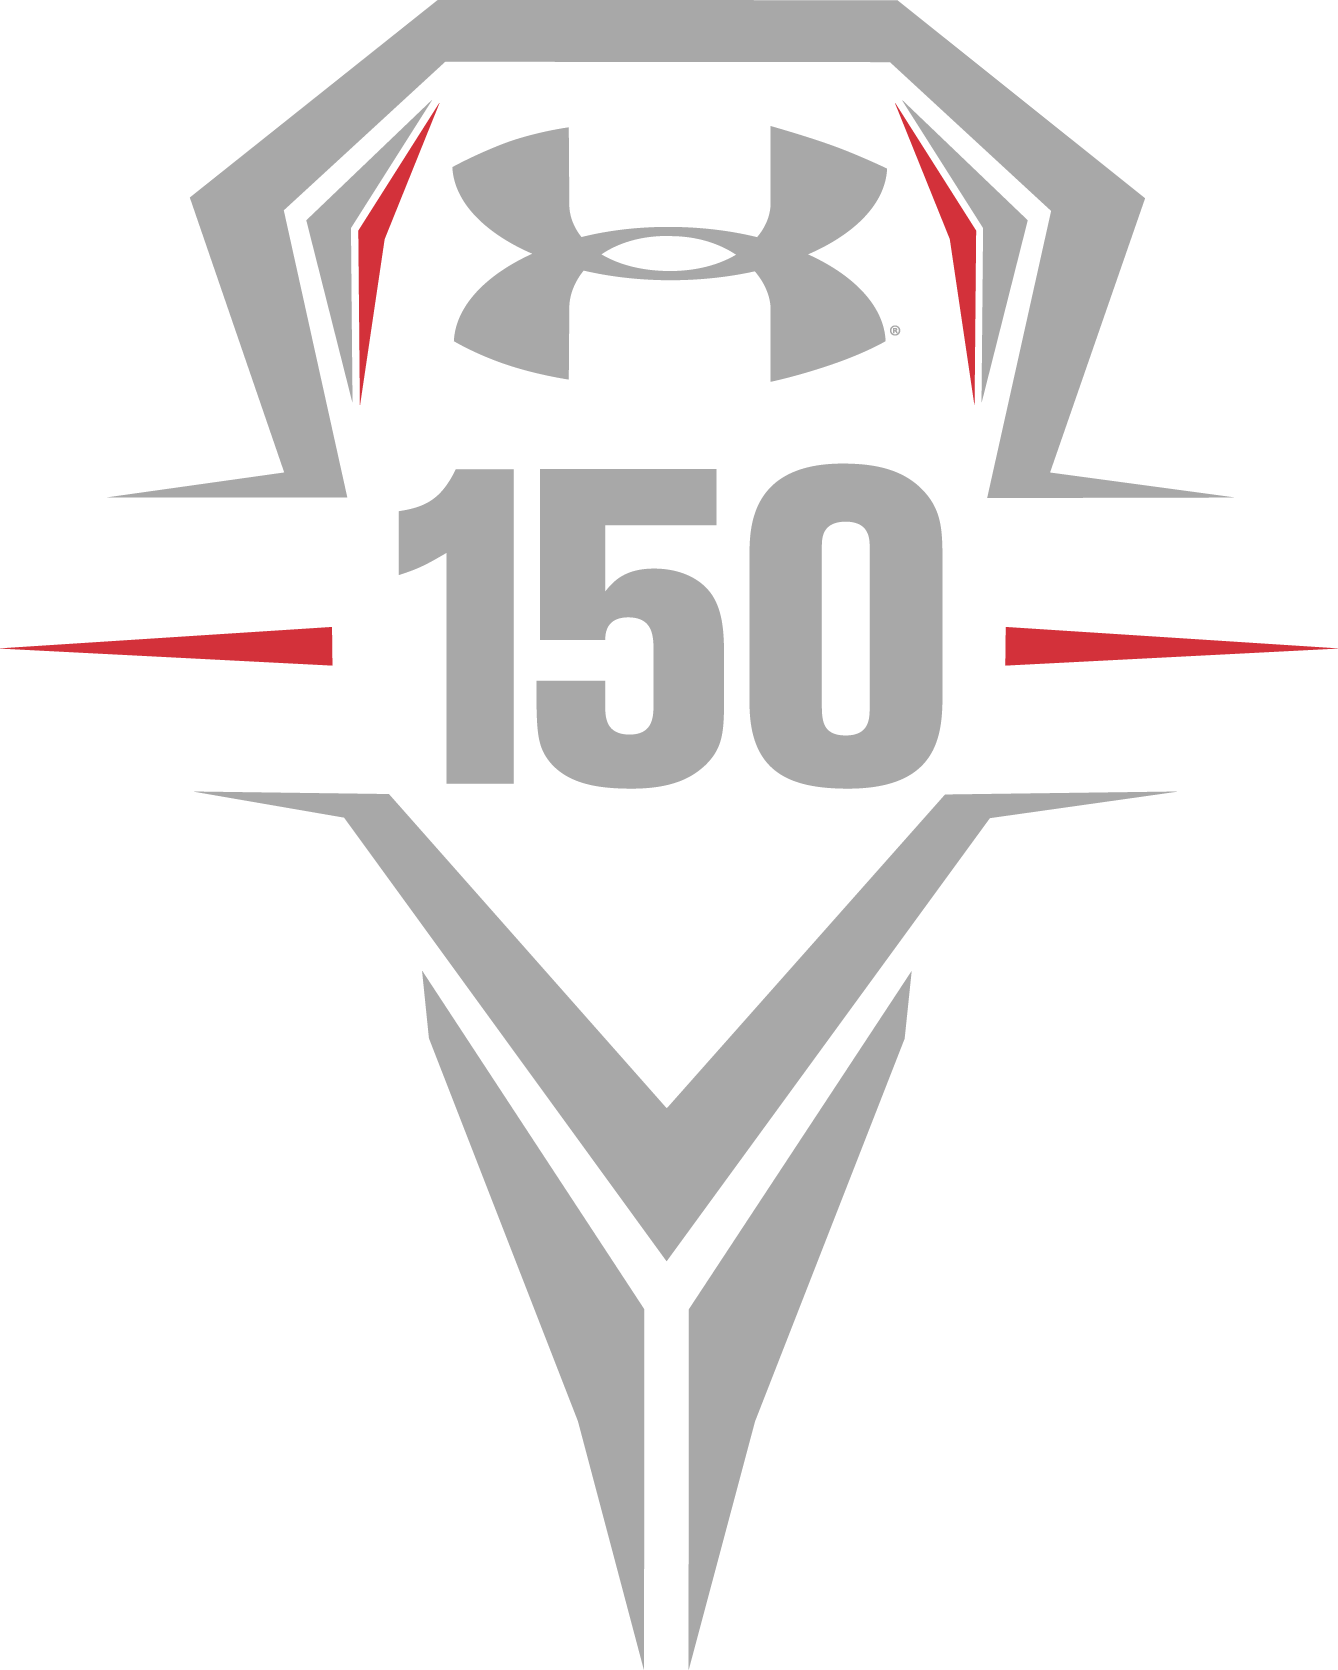 Under Armour Basketball Logo - Under Armour 150 - Home